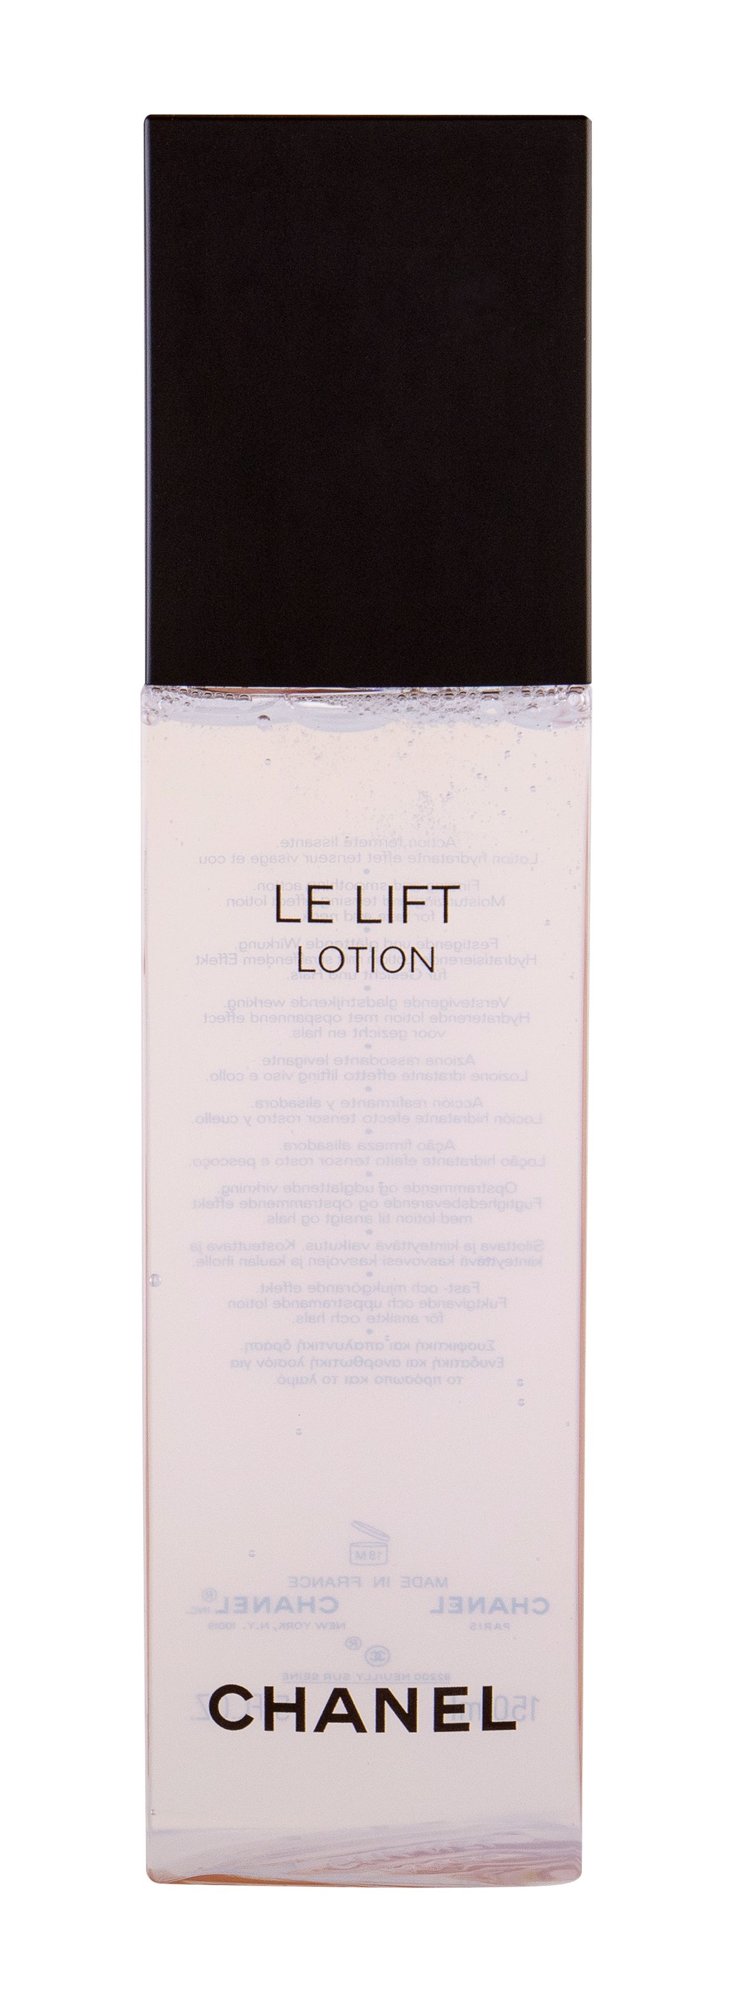 Chanel Le Lift 150ml valomasis vanduo veidui